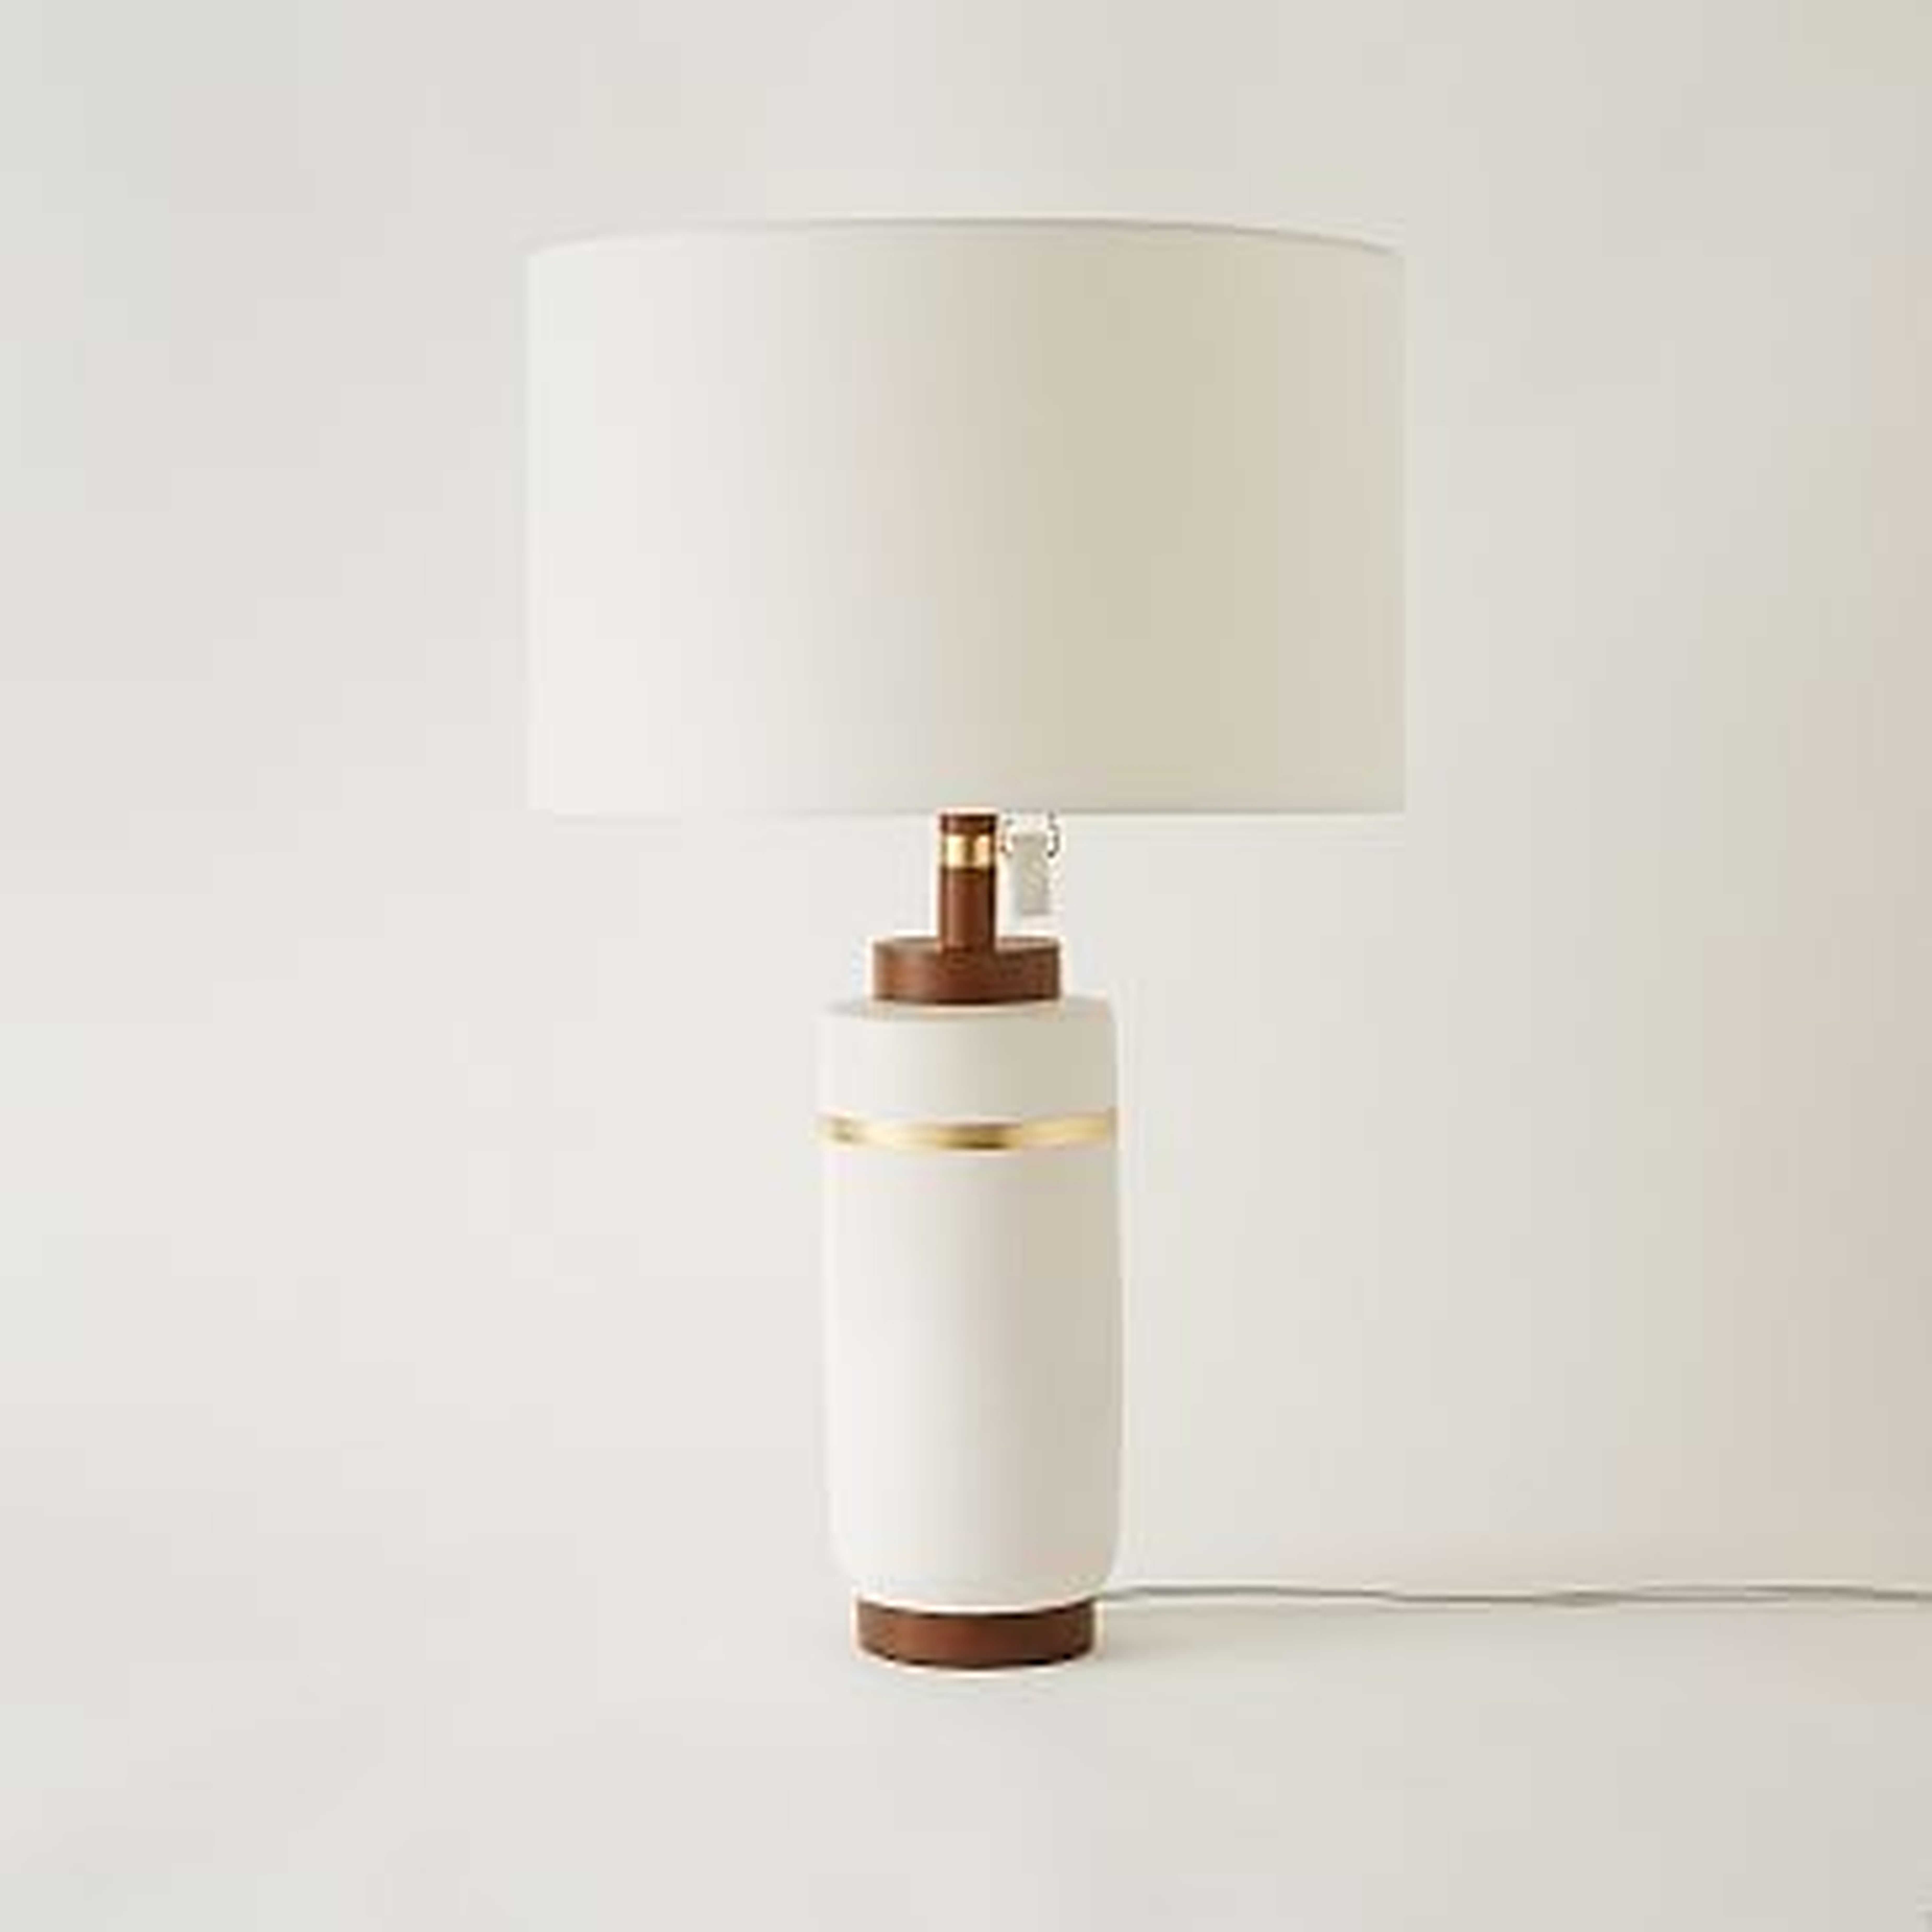 Roar + Rabbit Crackle Glaze Ceramic Table Lamp, Large, White Ceramic - West Elm